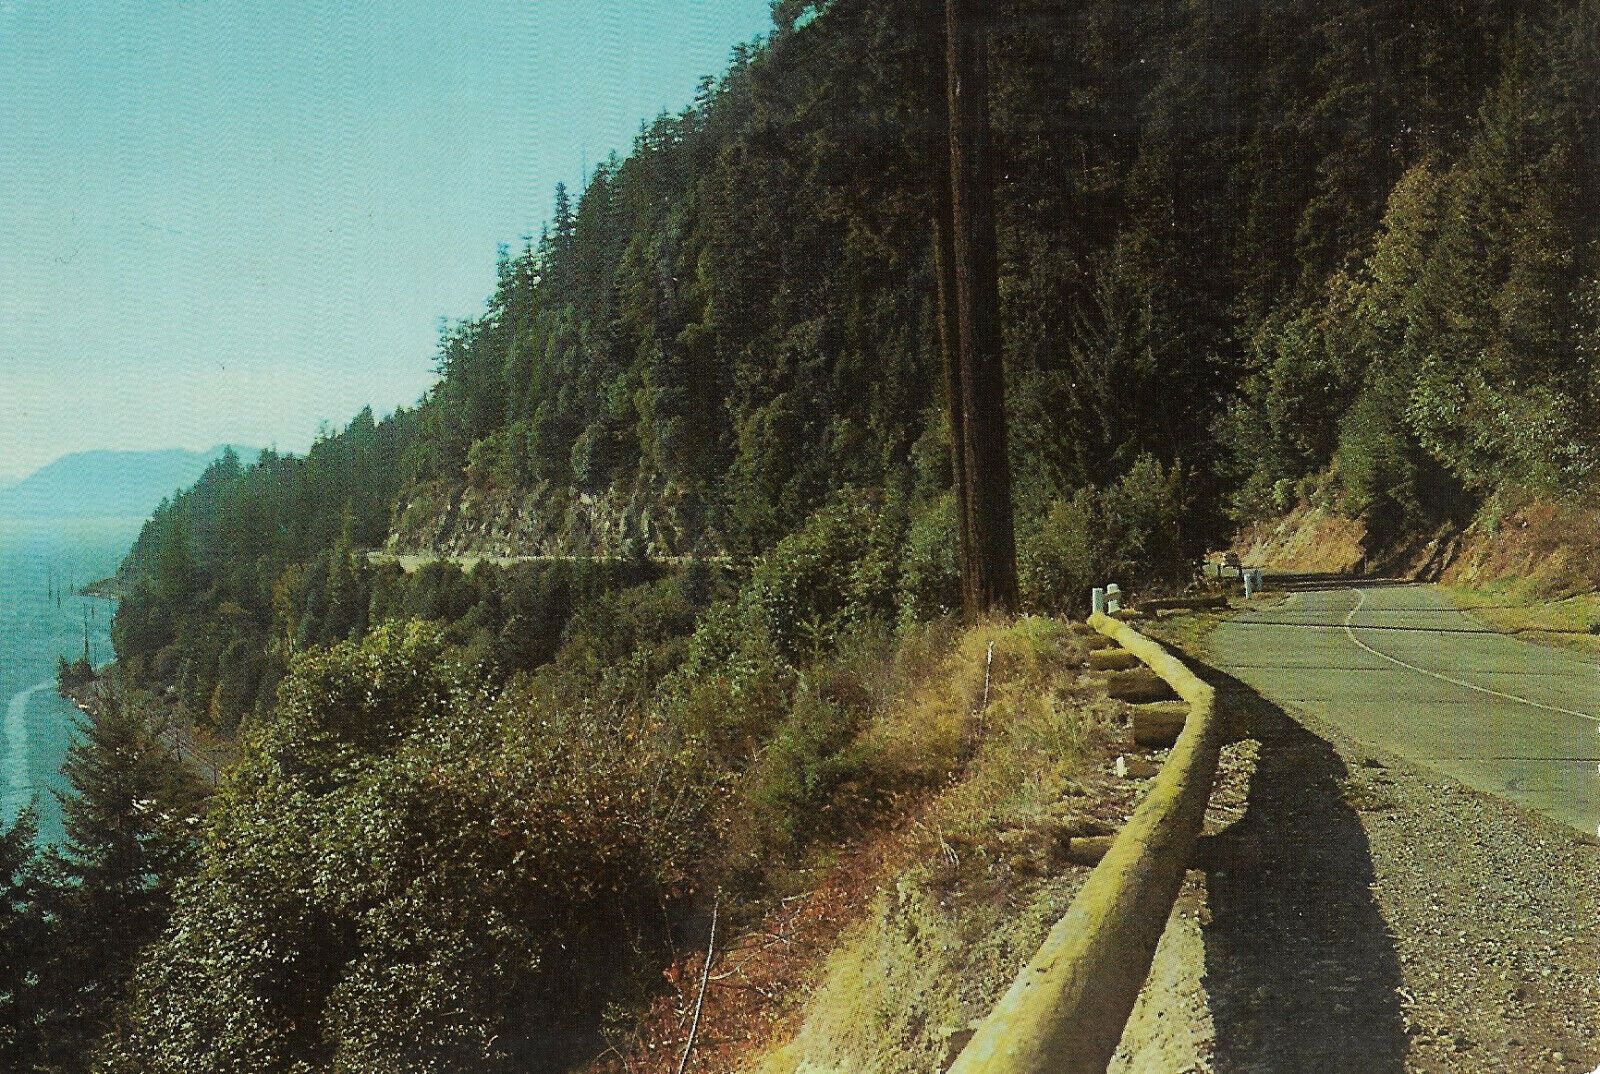 USA-Bellingham-View of the Chuckanut Drive on the Chuckanut Bay - 1984